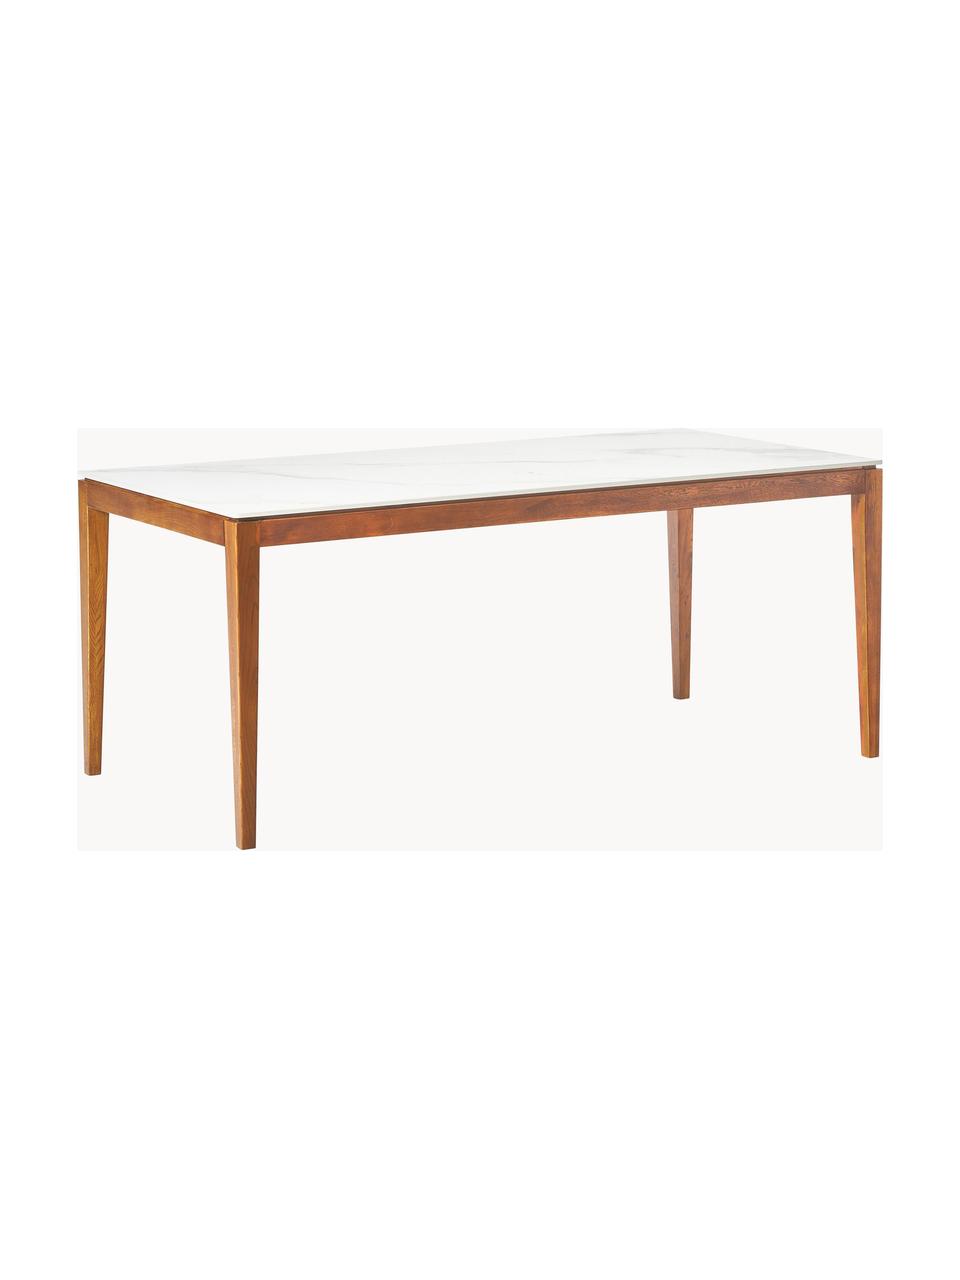 Table look marbre Jackson, tailles variées, Aspect marbre blanc, chêne laqué brun, larg. 140 x prof. 90 cm